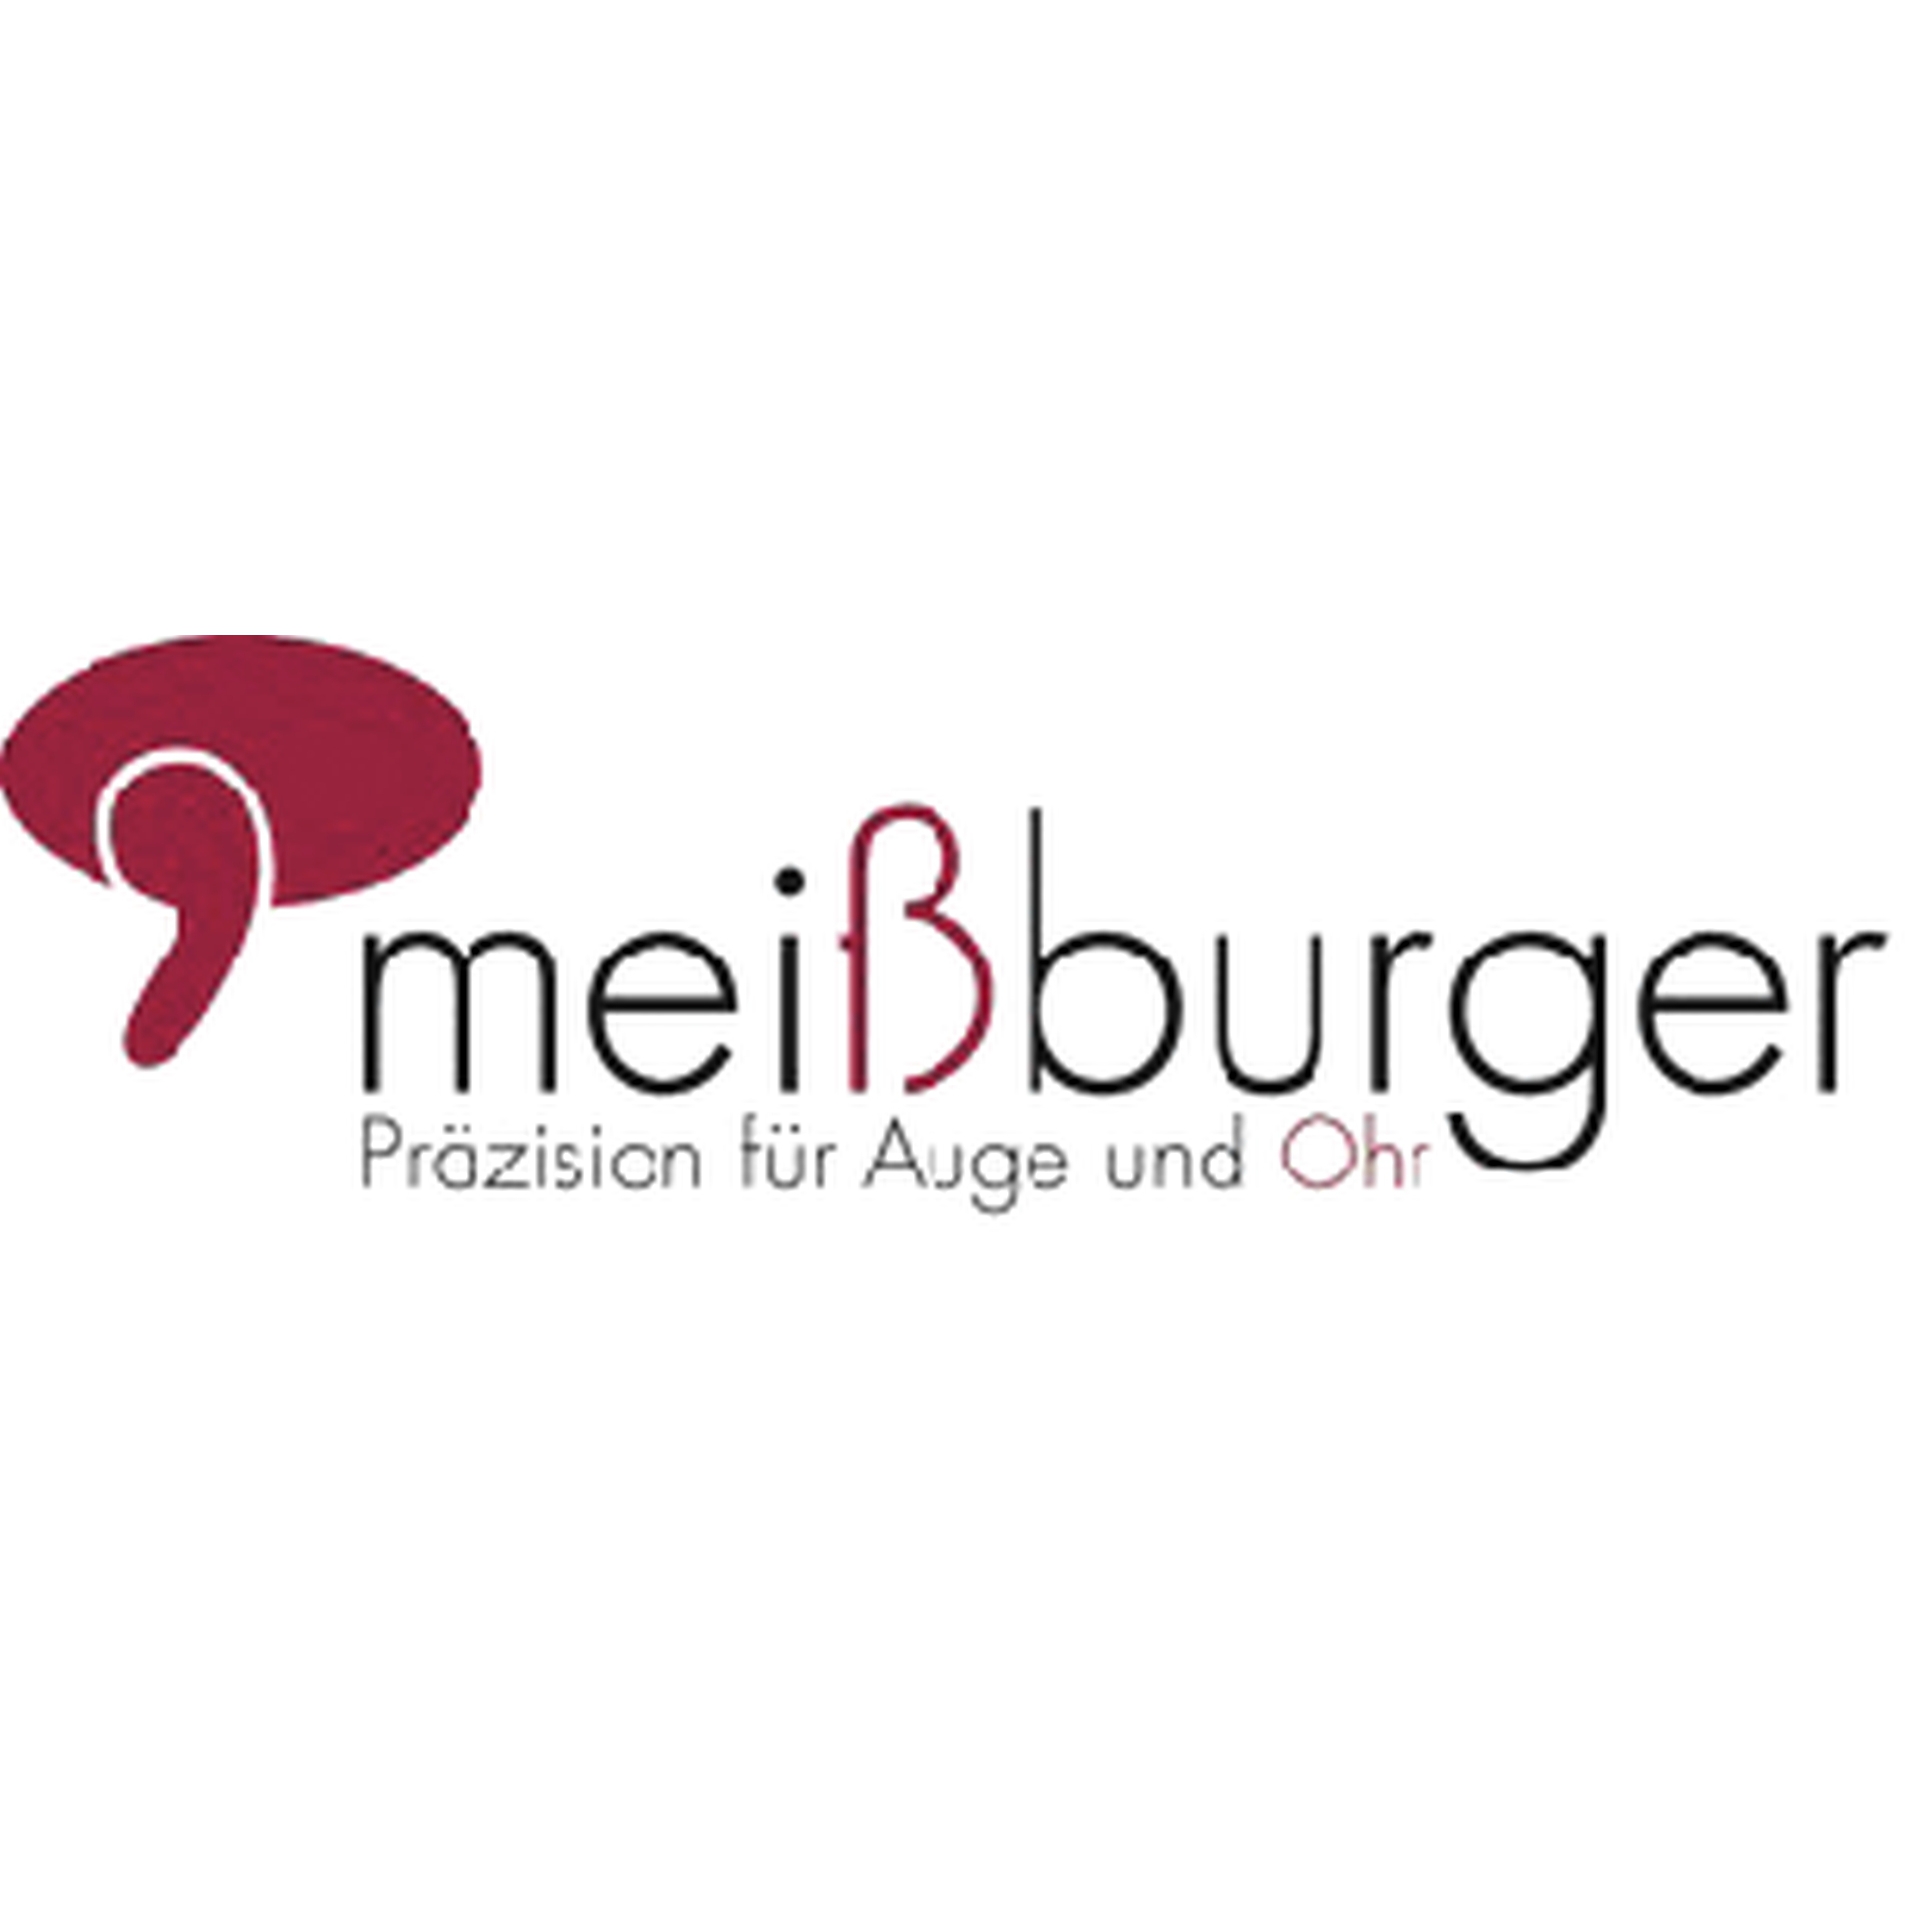 Hans Meißburger GmbH in Karlsruhe - Logo